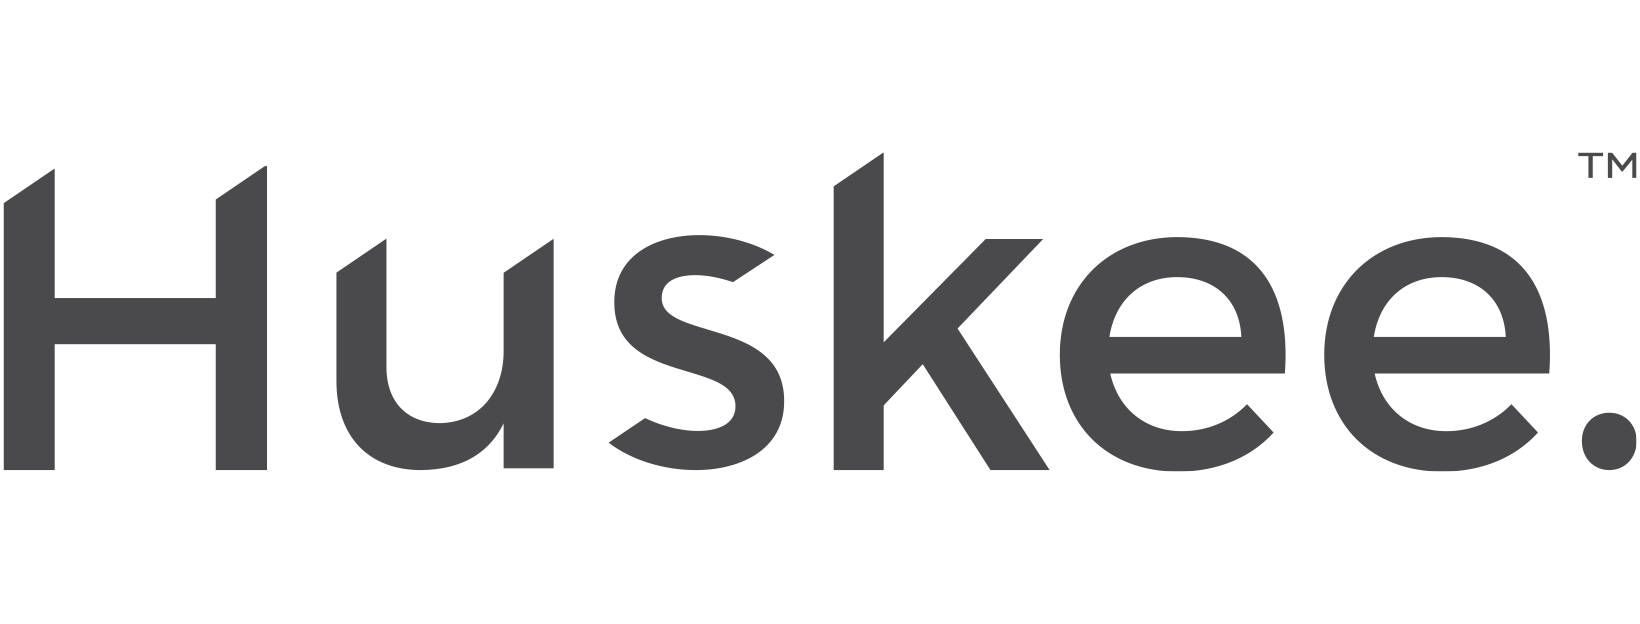 Huskee USA Knowledge Centre  logo